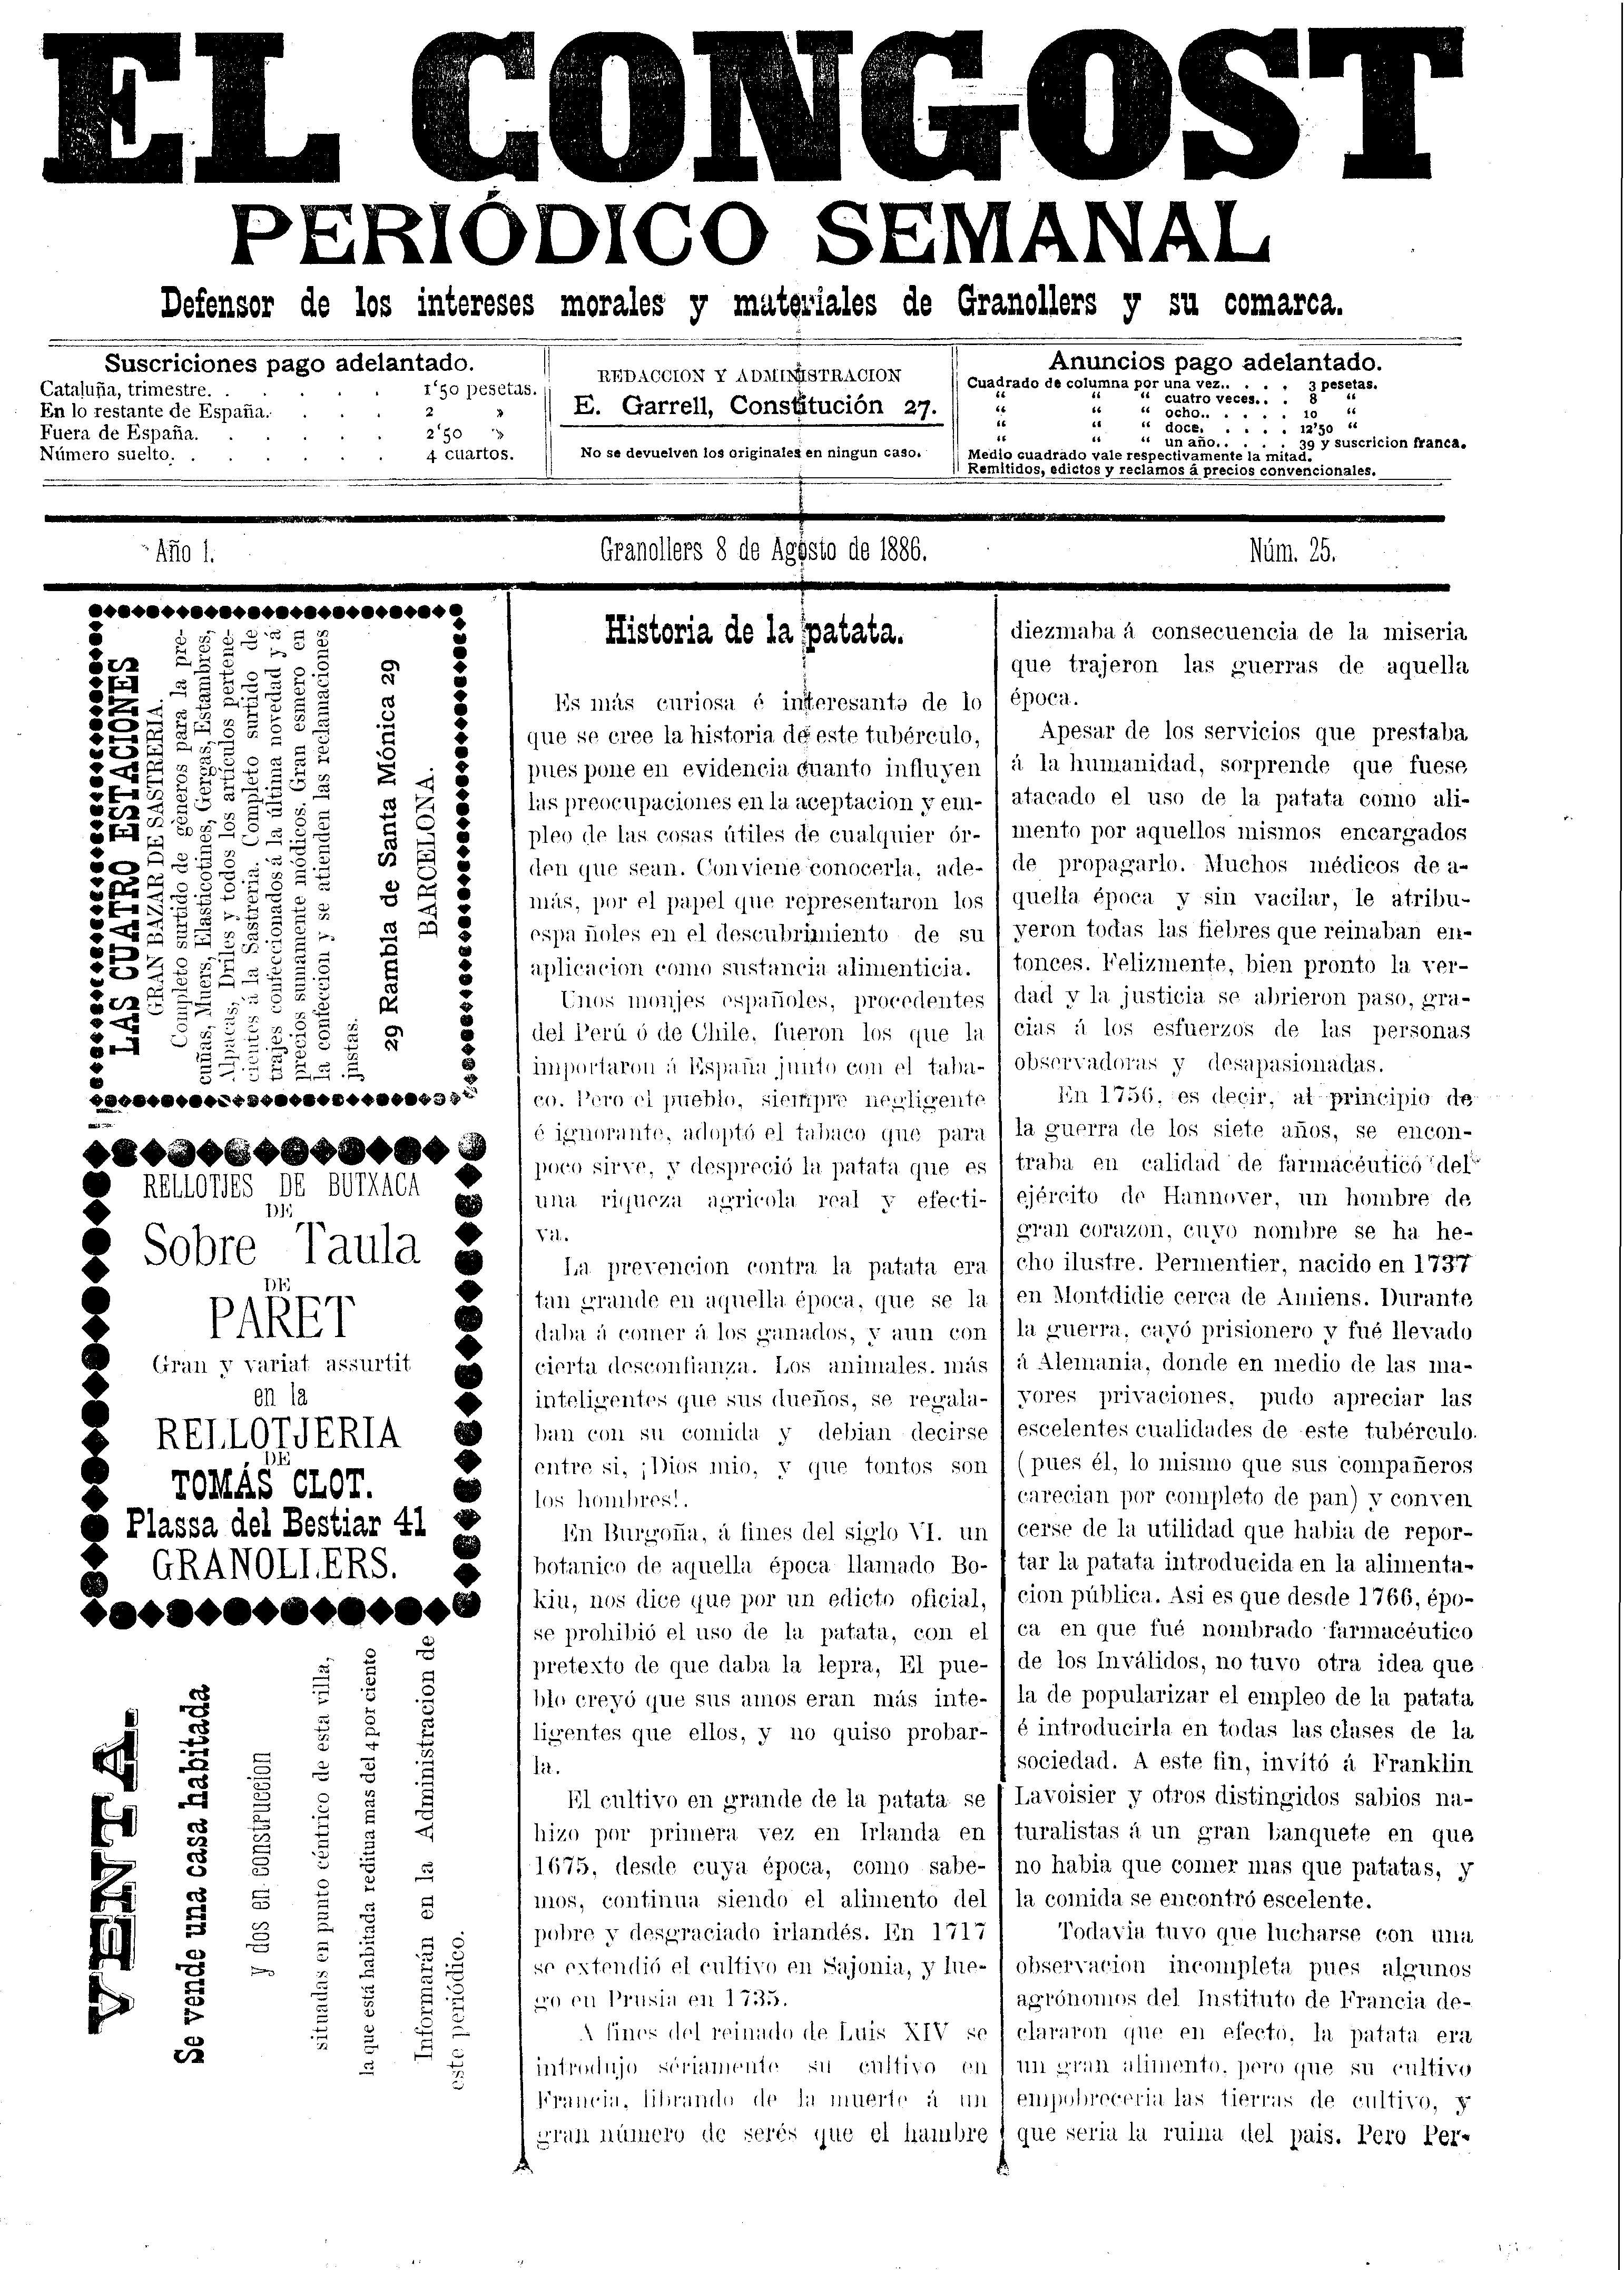 El Congost, 8/8/1886 [Exemplar]